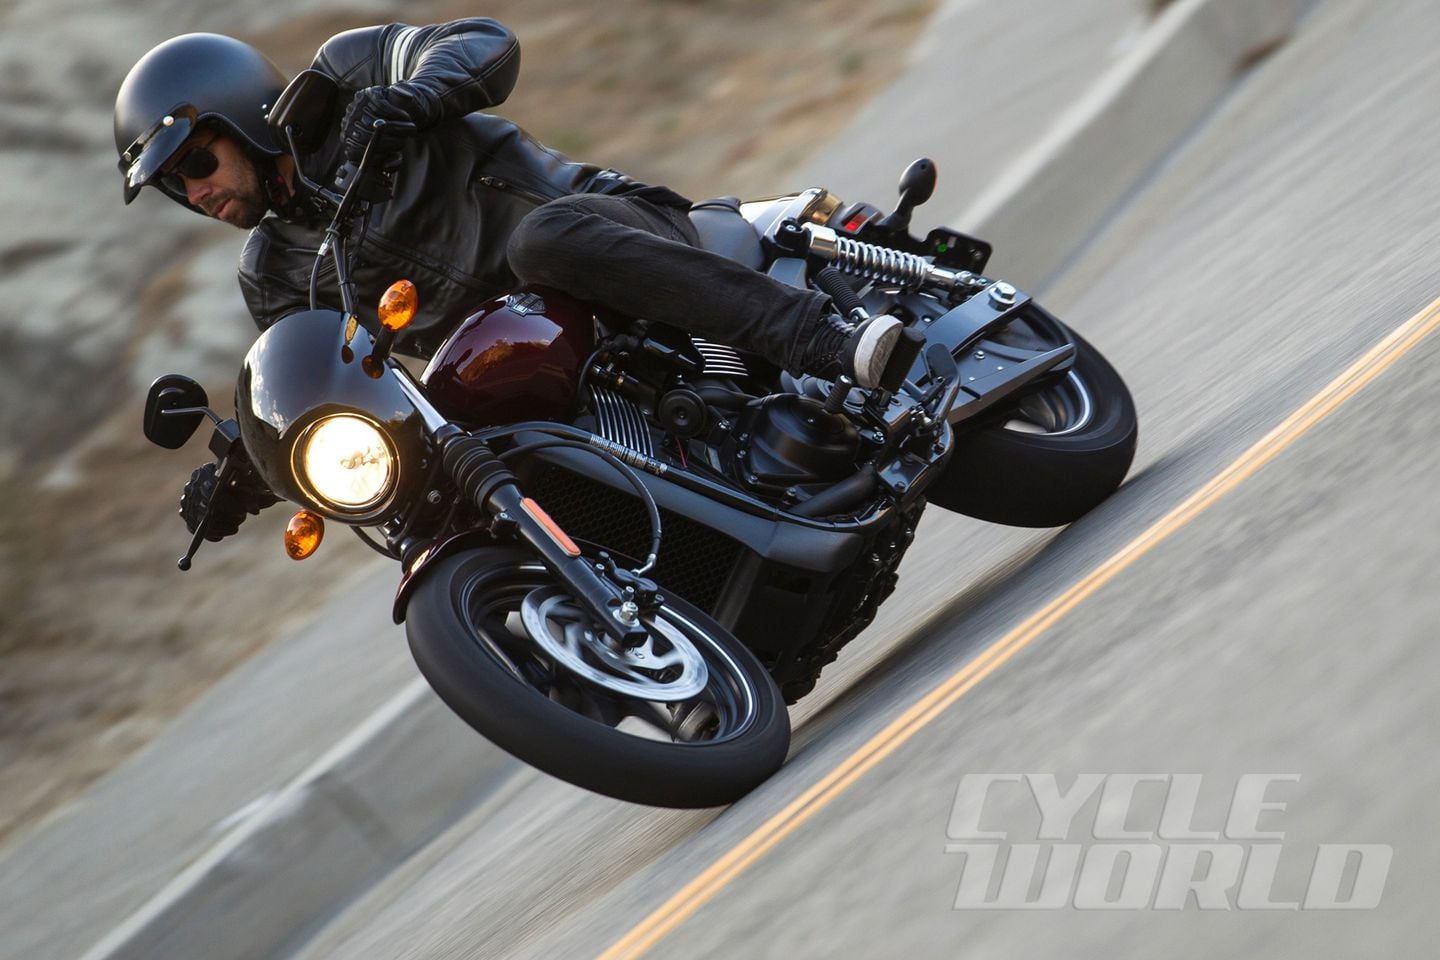 Harley Davidson Street 750 Vs Yamaha Star Bolt Comparison Test Review Cycle World